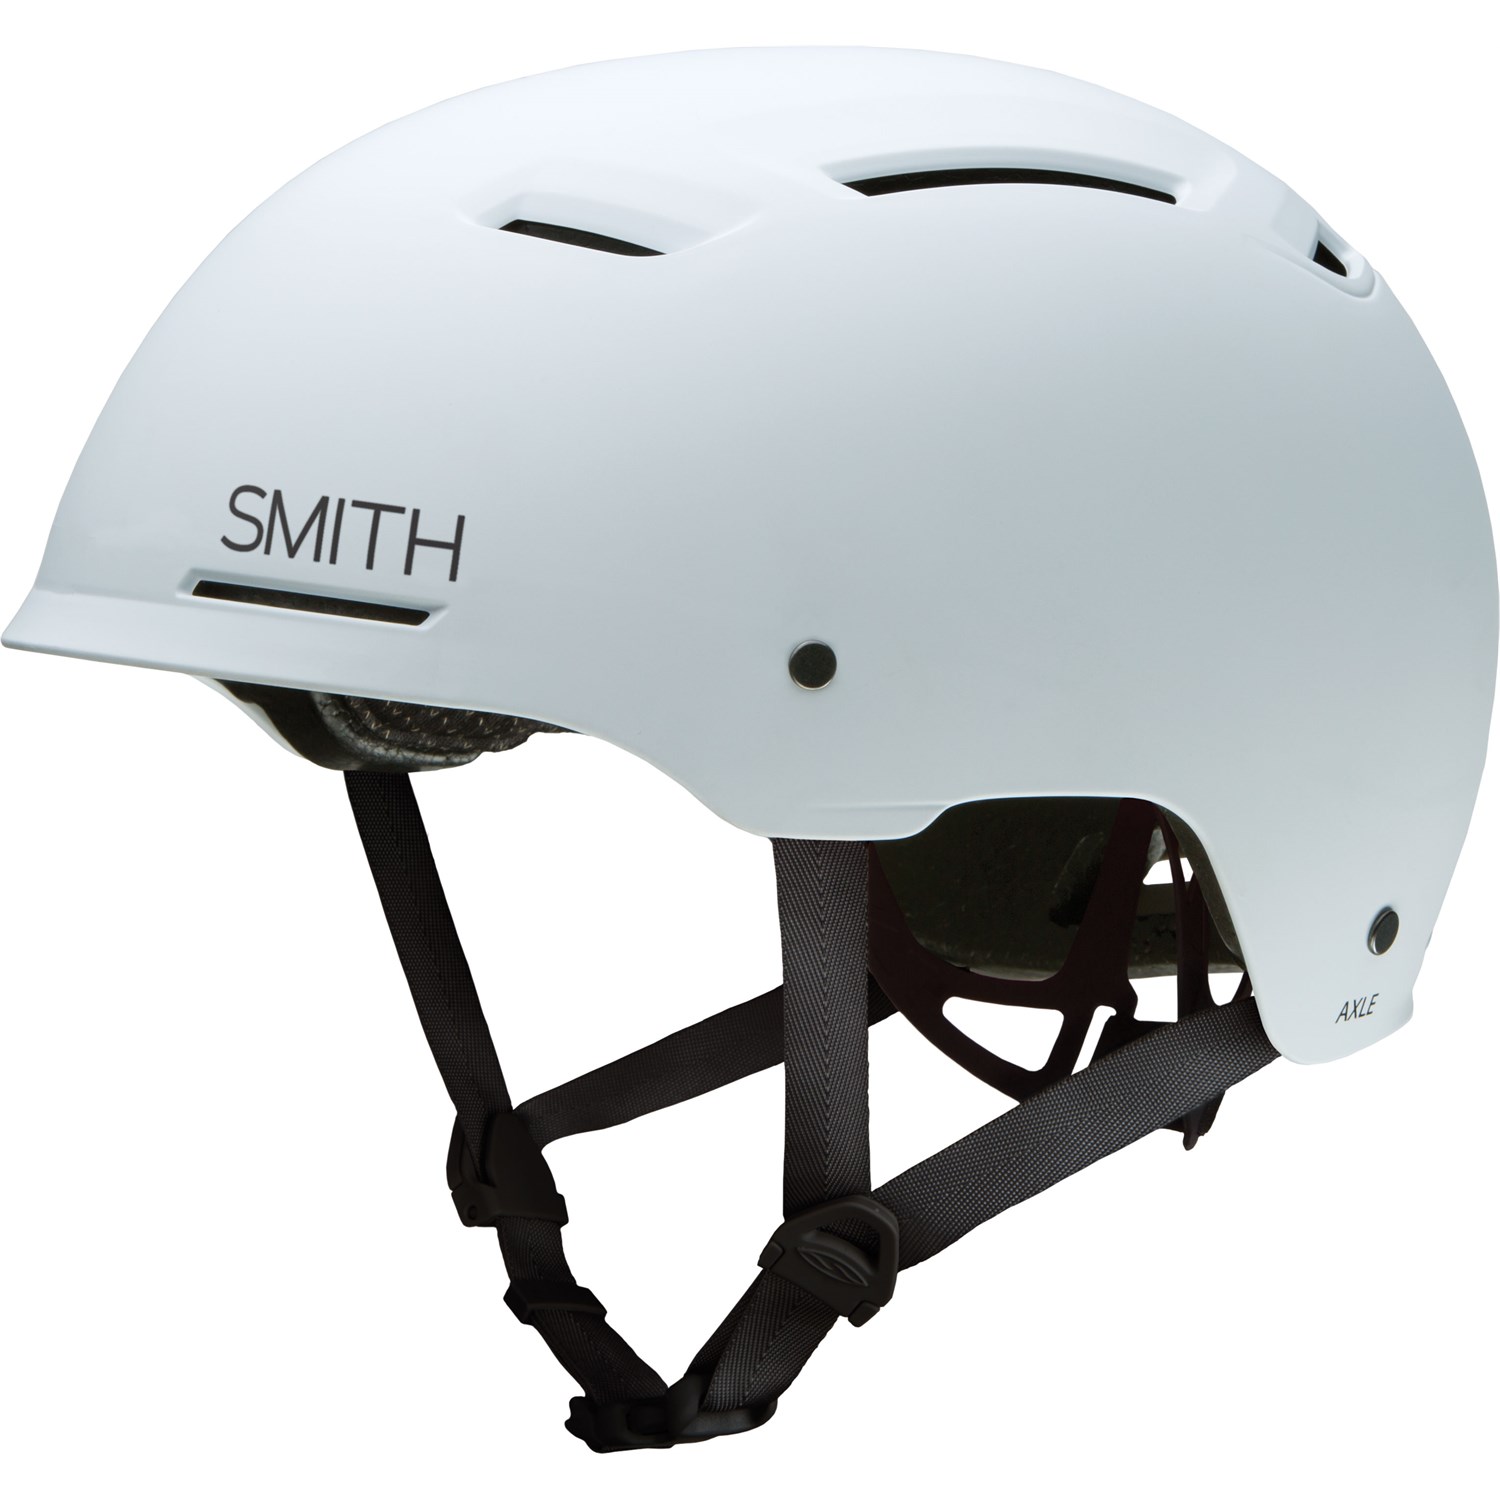 Smith Helmet Size Chart